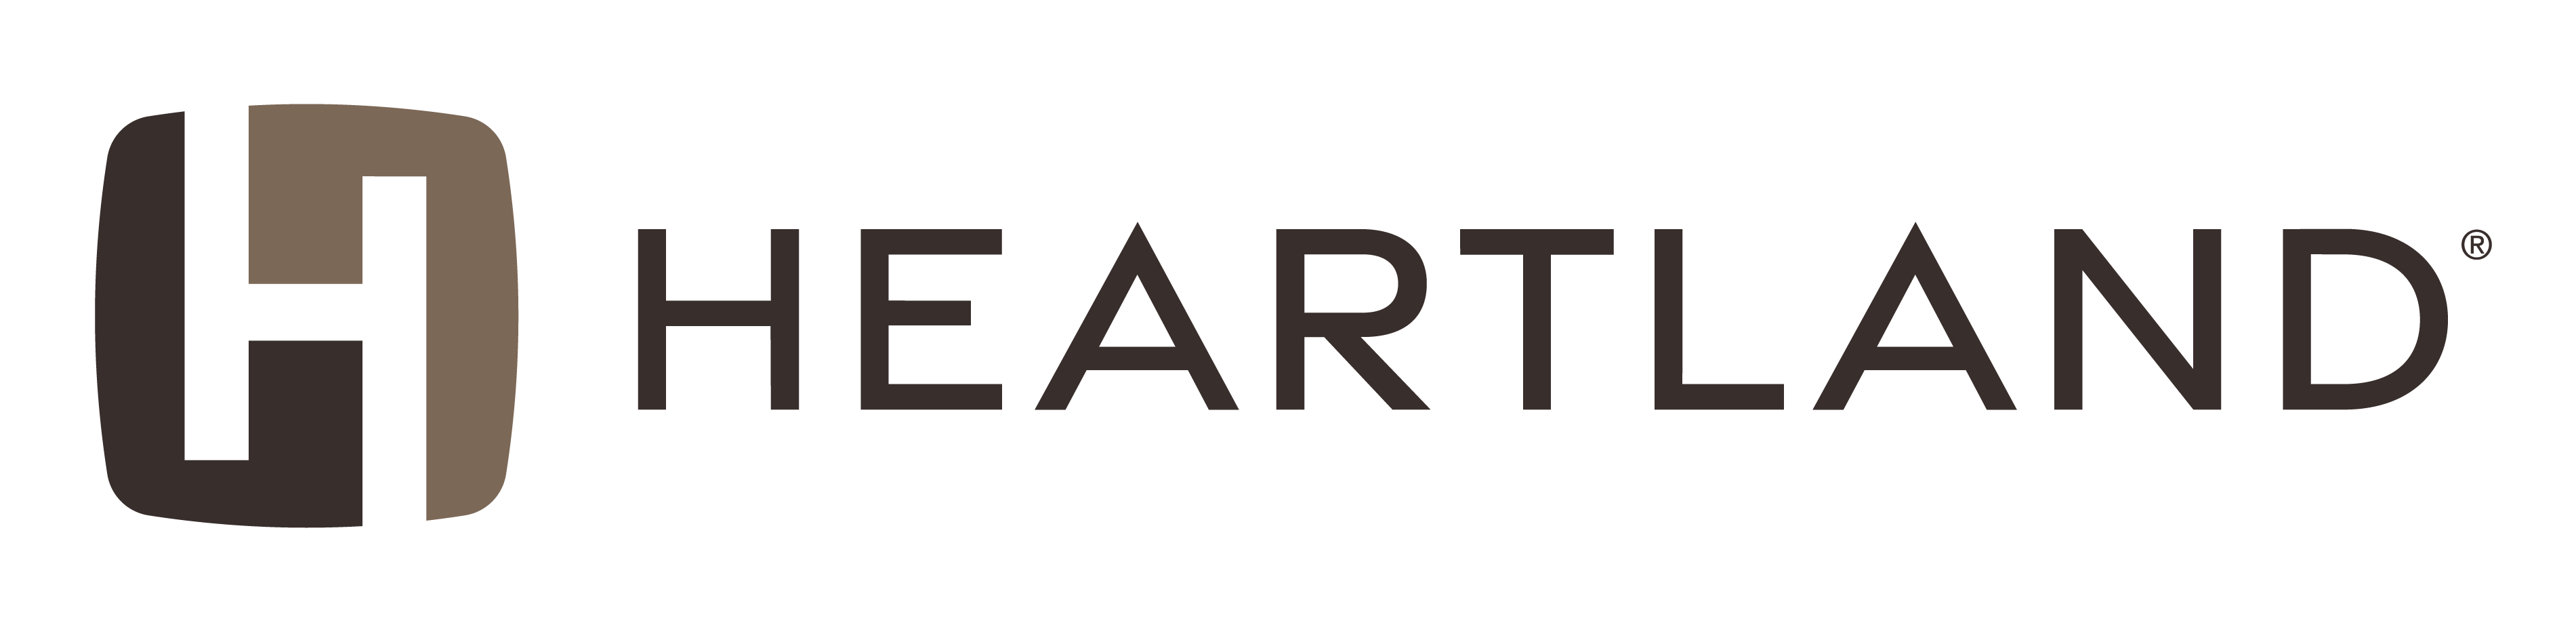 Heartland_Logo_2Color